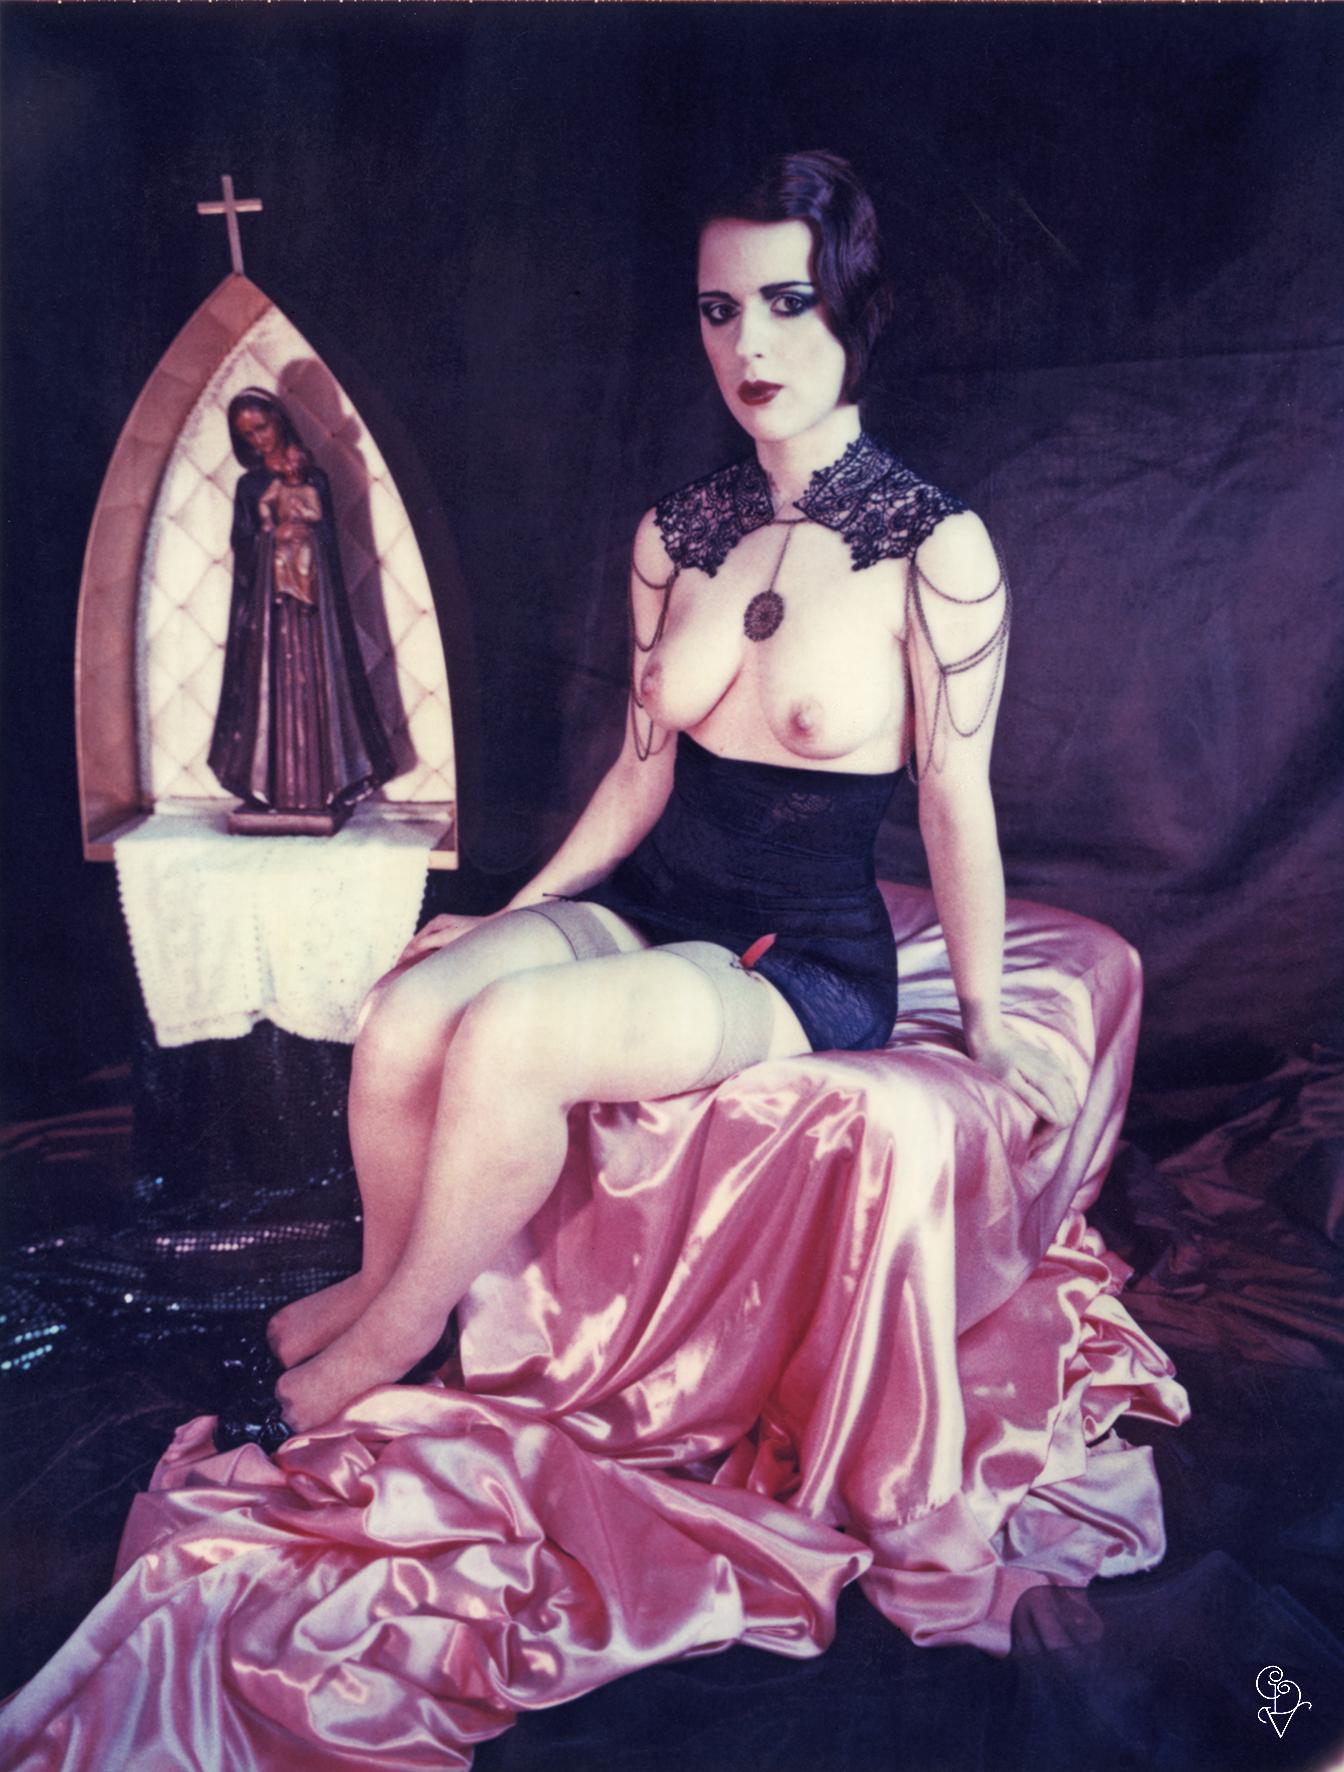 Carmen de Vos Nude Photograph - Lourdes [From the series Odd Stories]